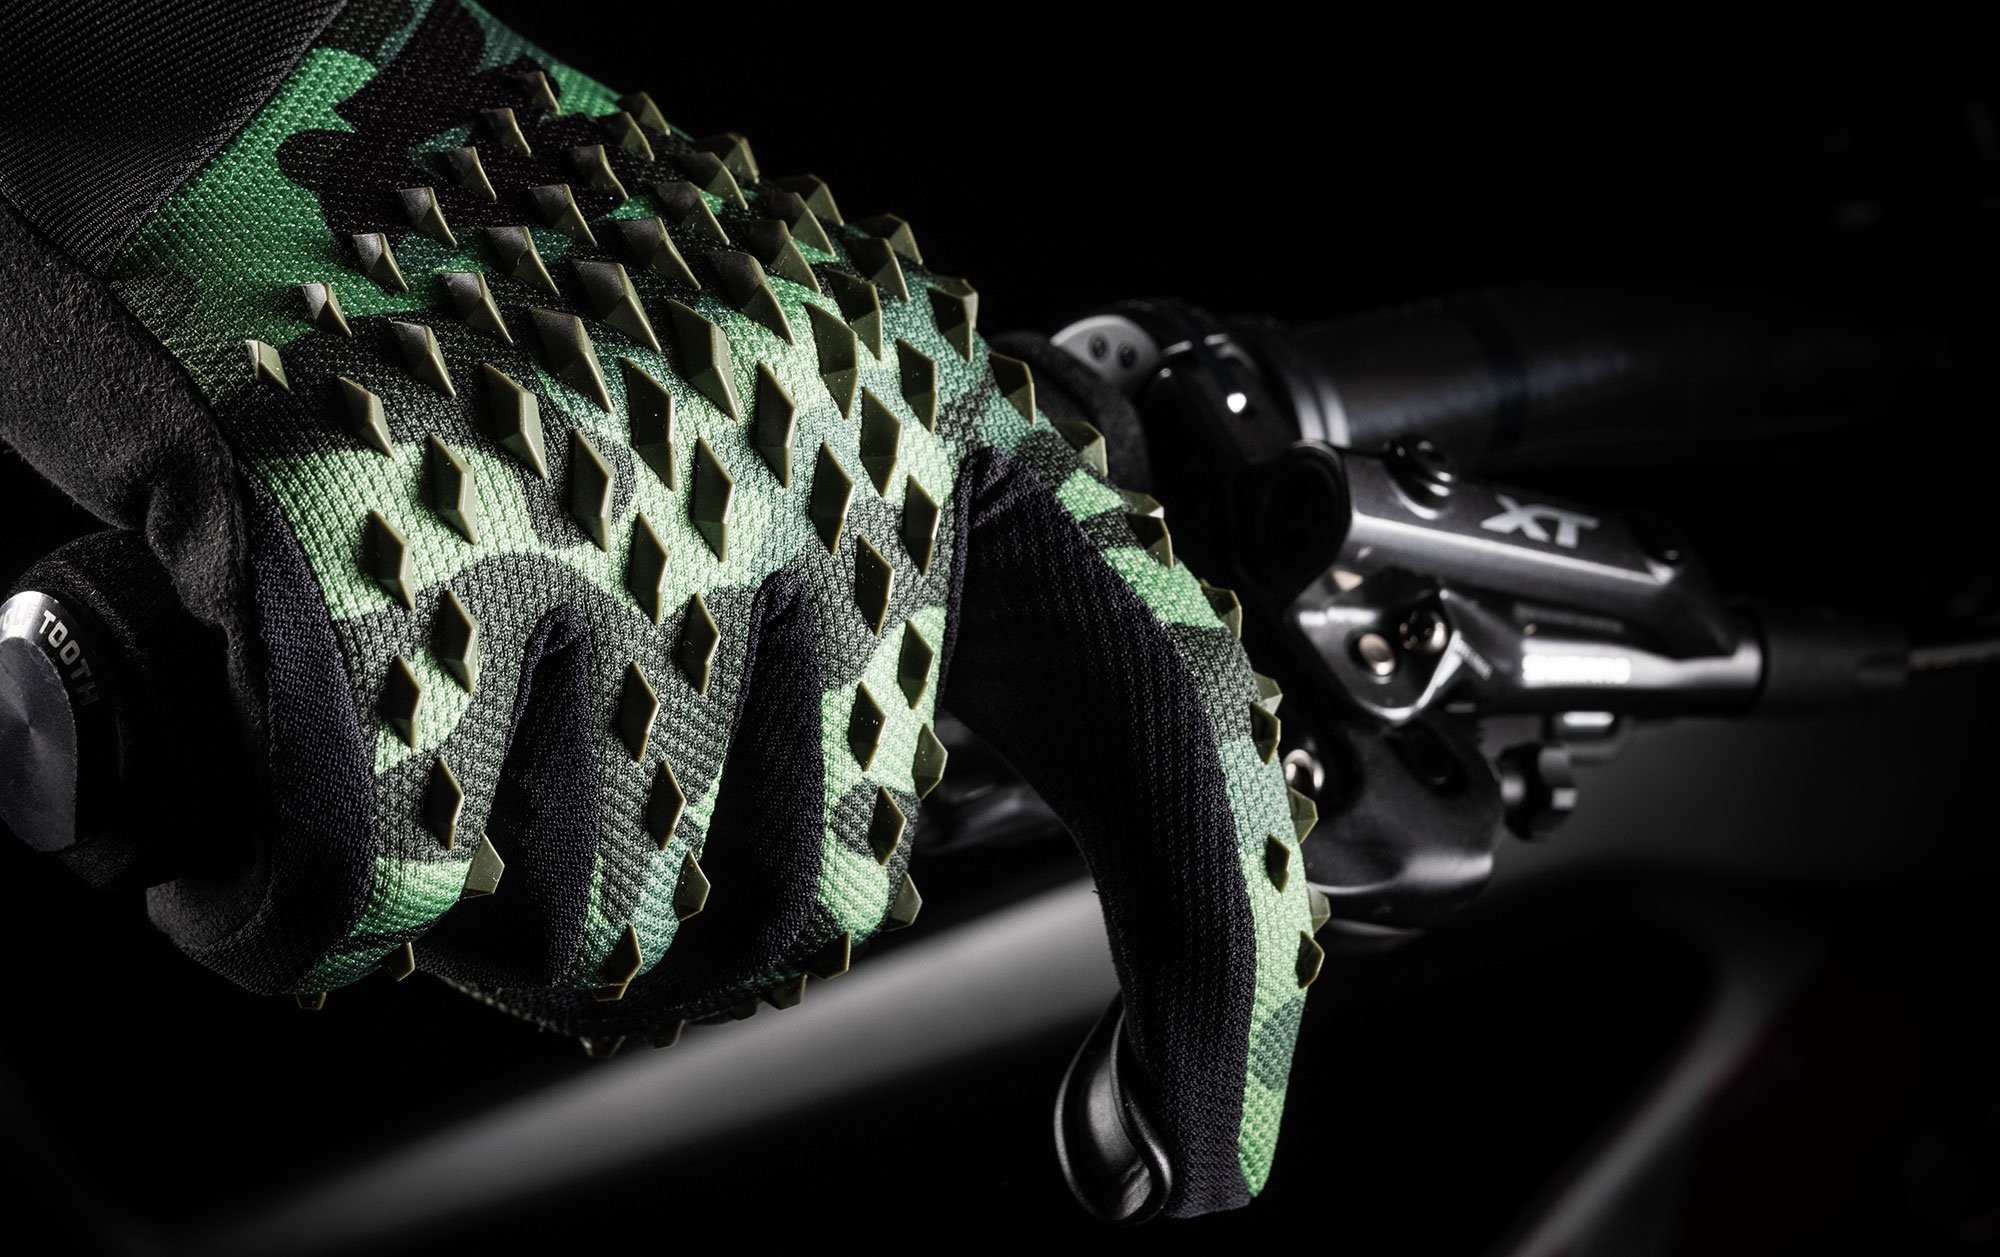 Bluegrass Prizma 3D MTB Glove for DH, Enduro, Trail, and BMX